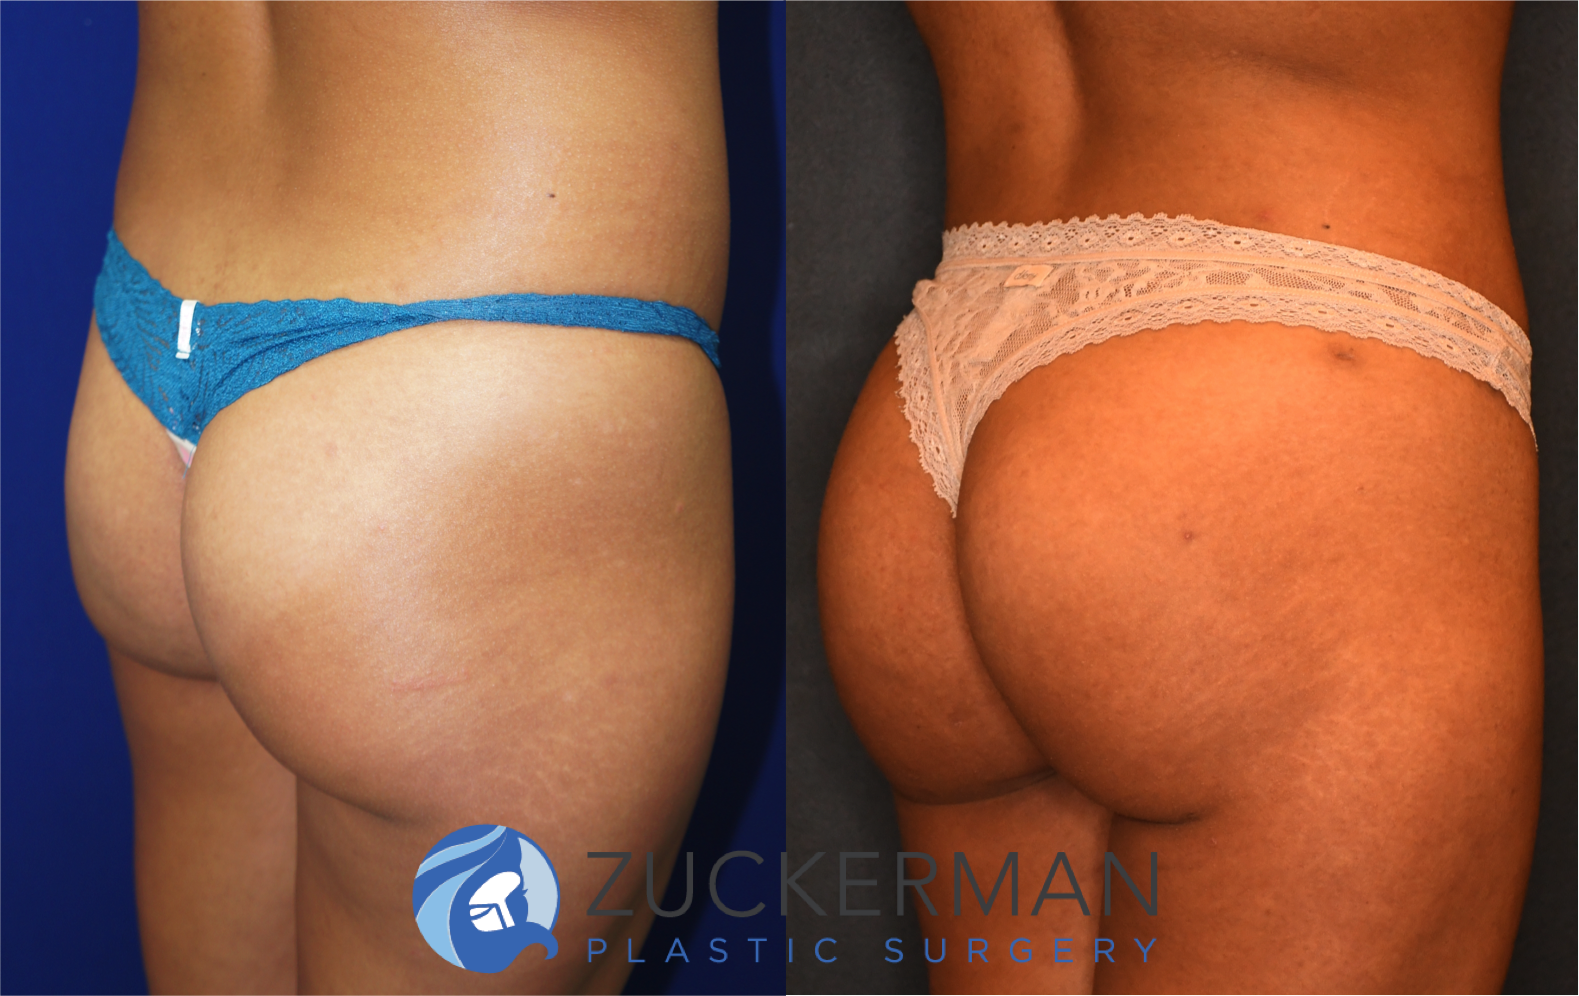 brazilian butt lift, bbl, buttock augmentation, 5, before and after, joshua zuckerman, posterior right oblique view